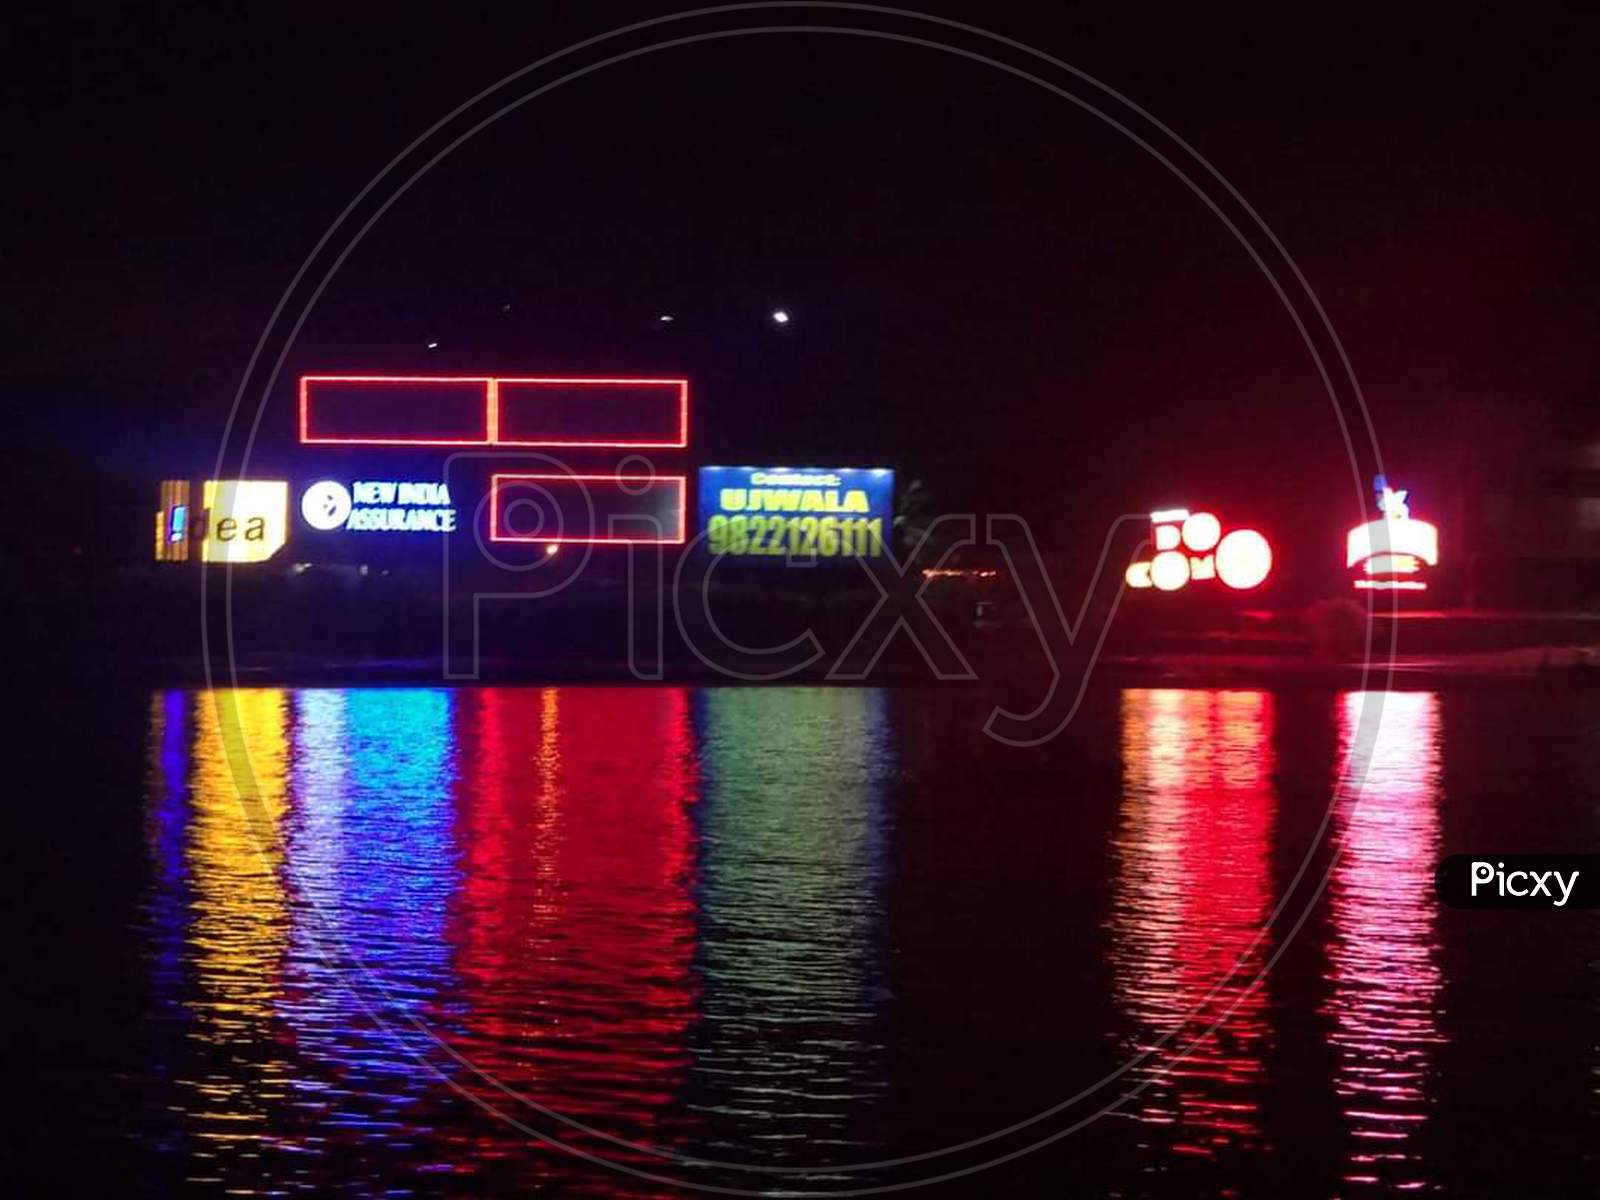 Goa night lights reflection